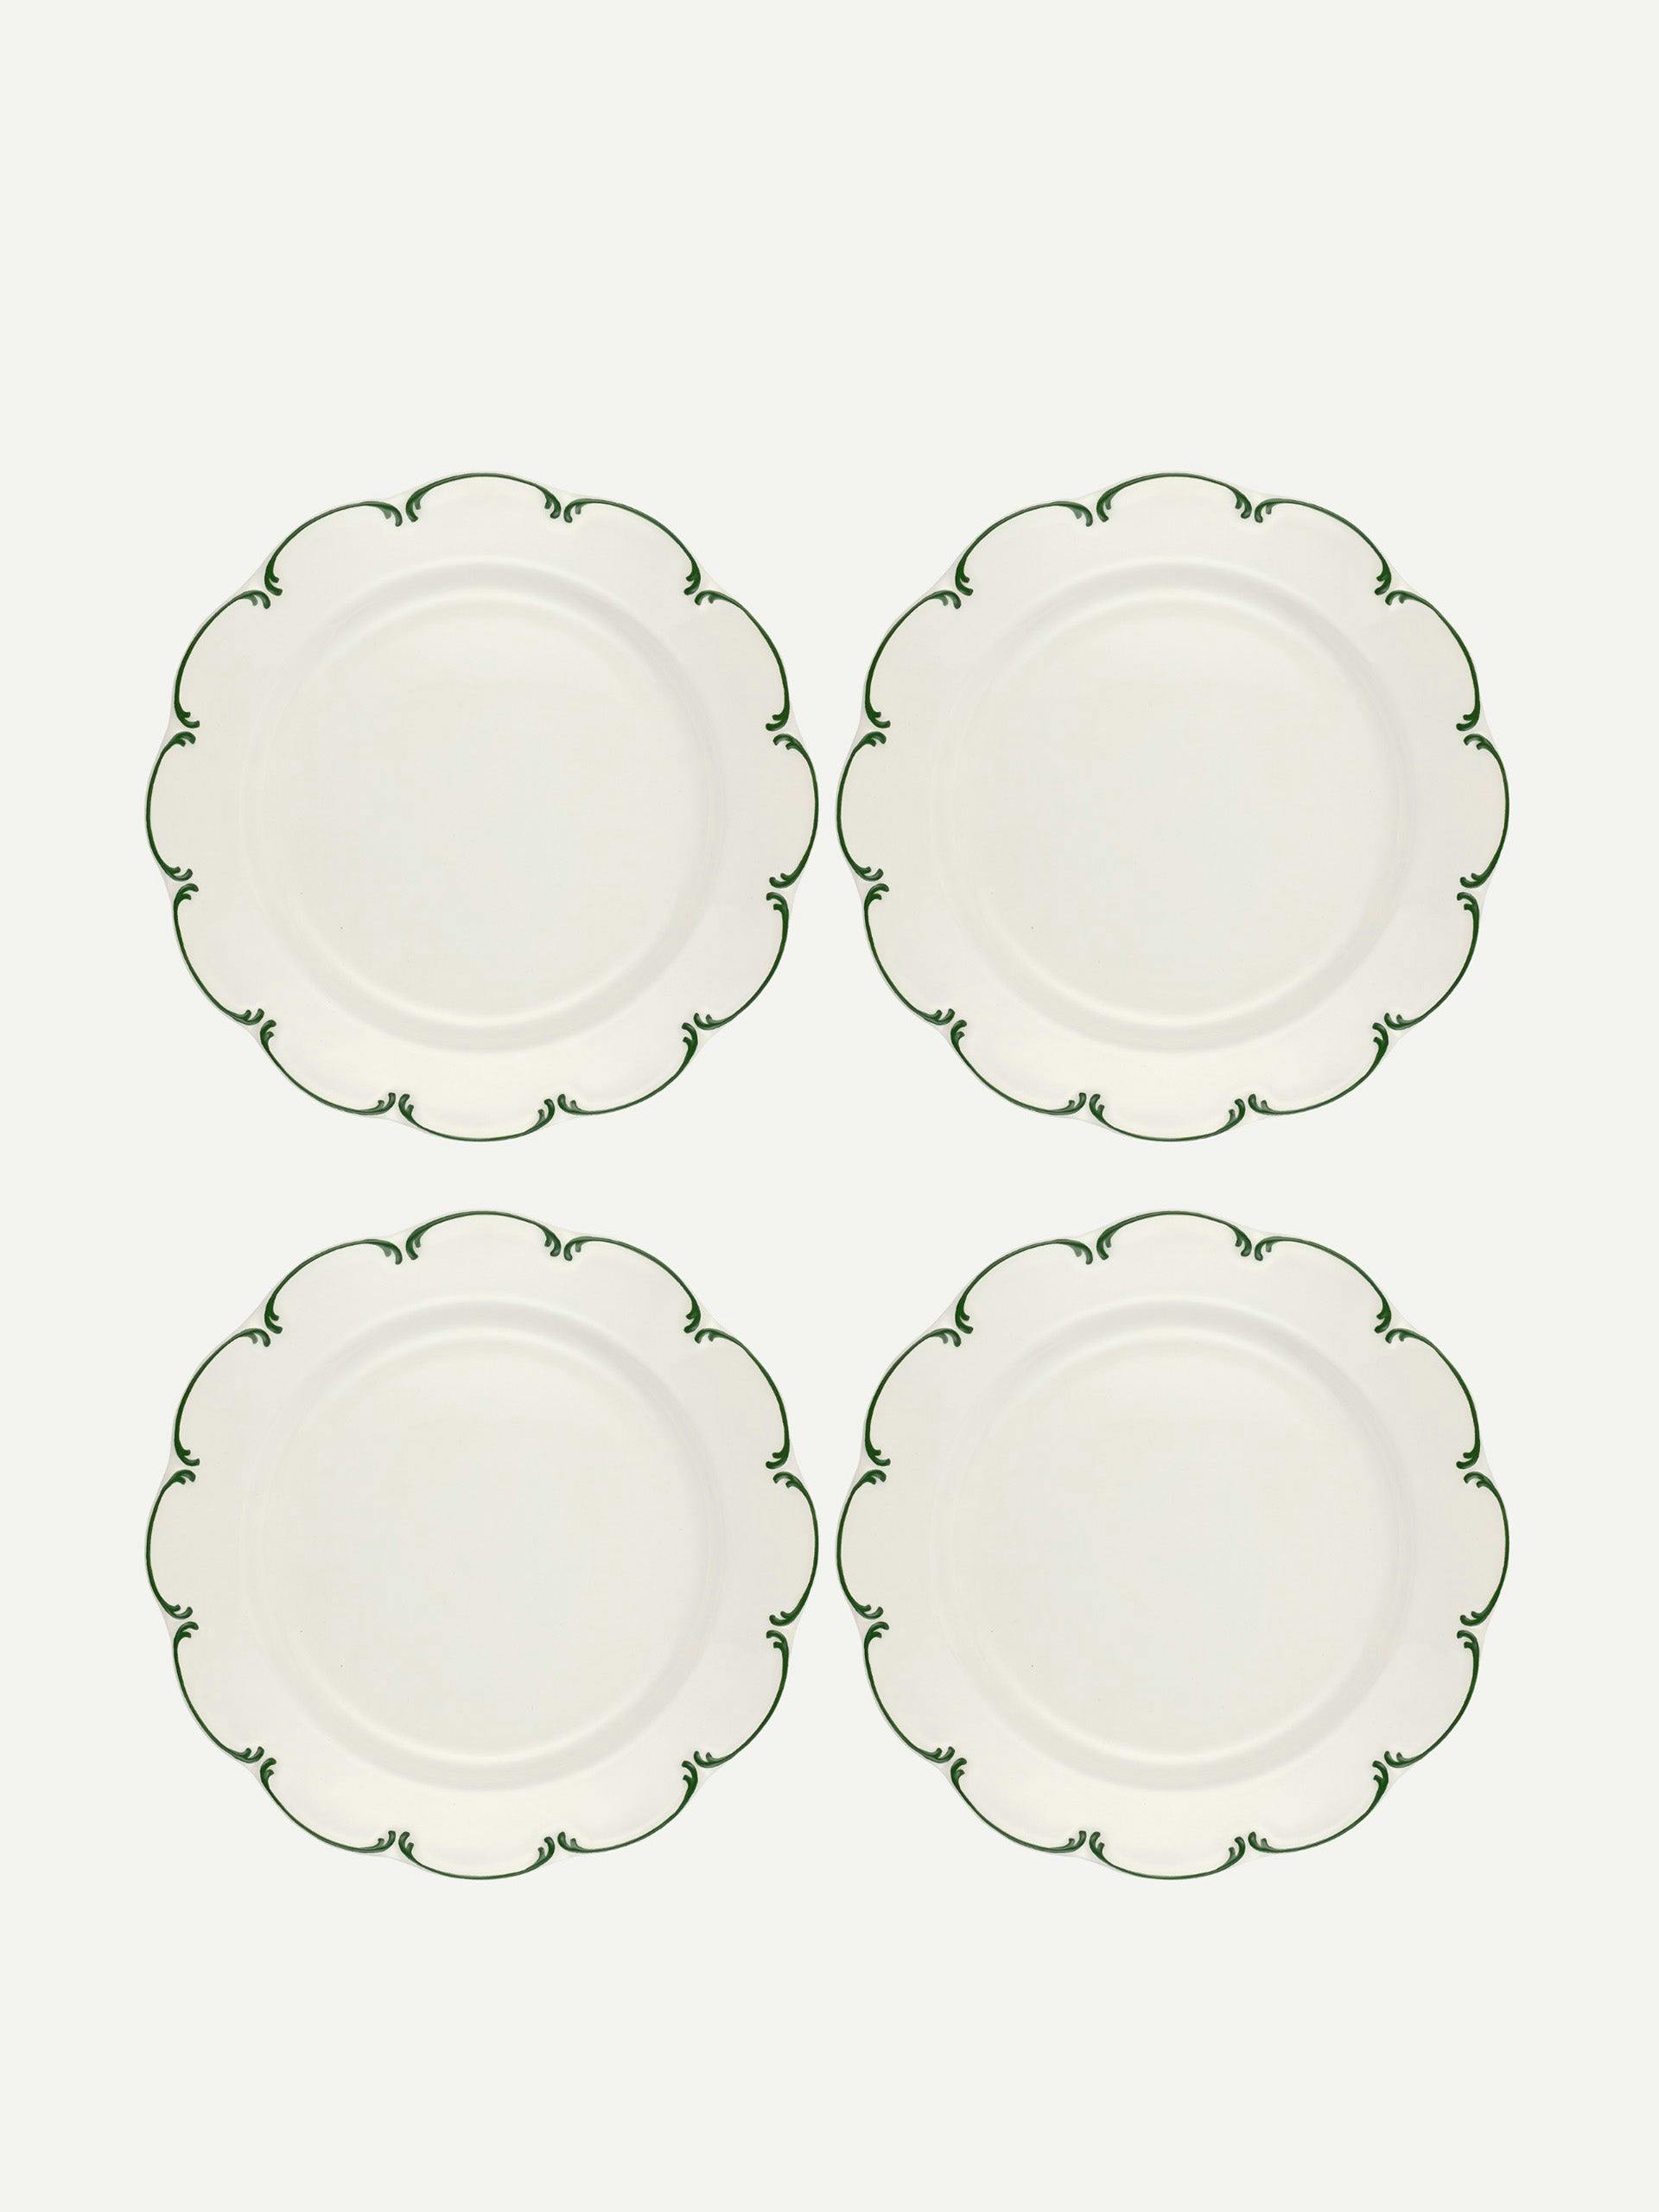 Olivia scalloped dinner plates, green filet (set of 4)